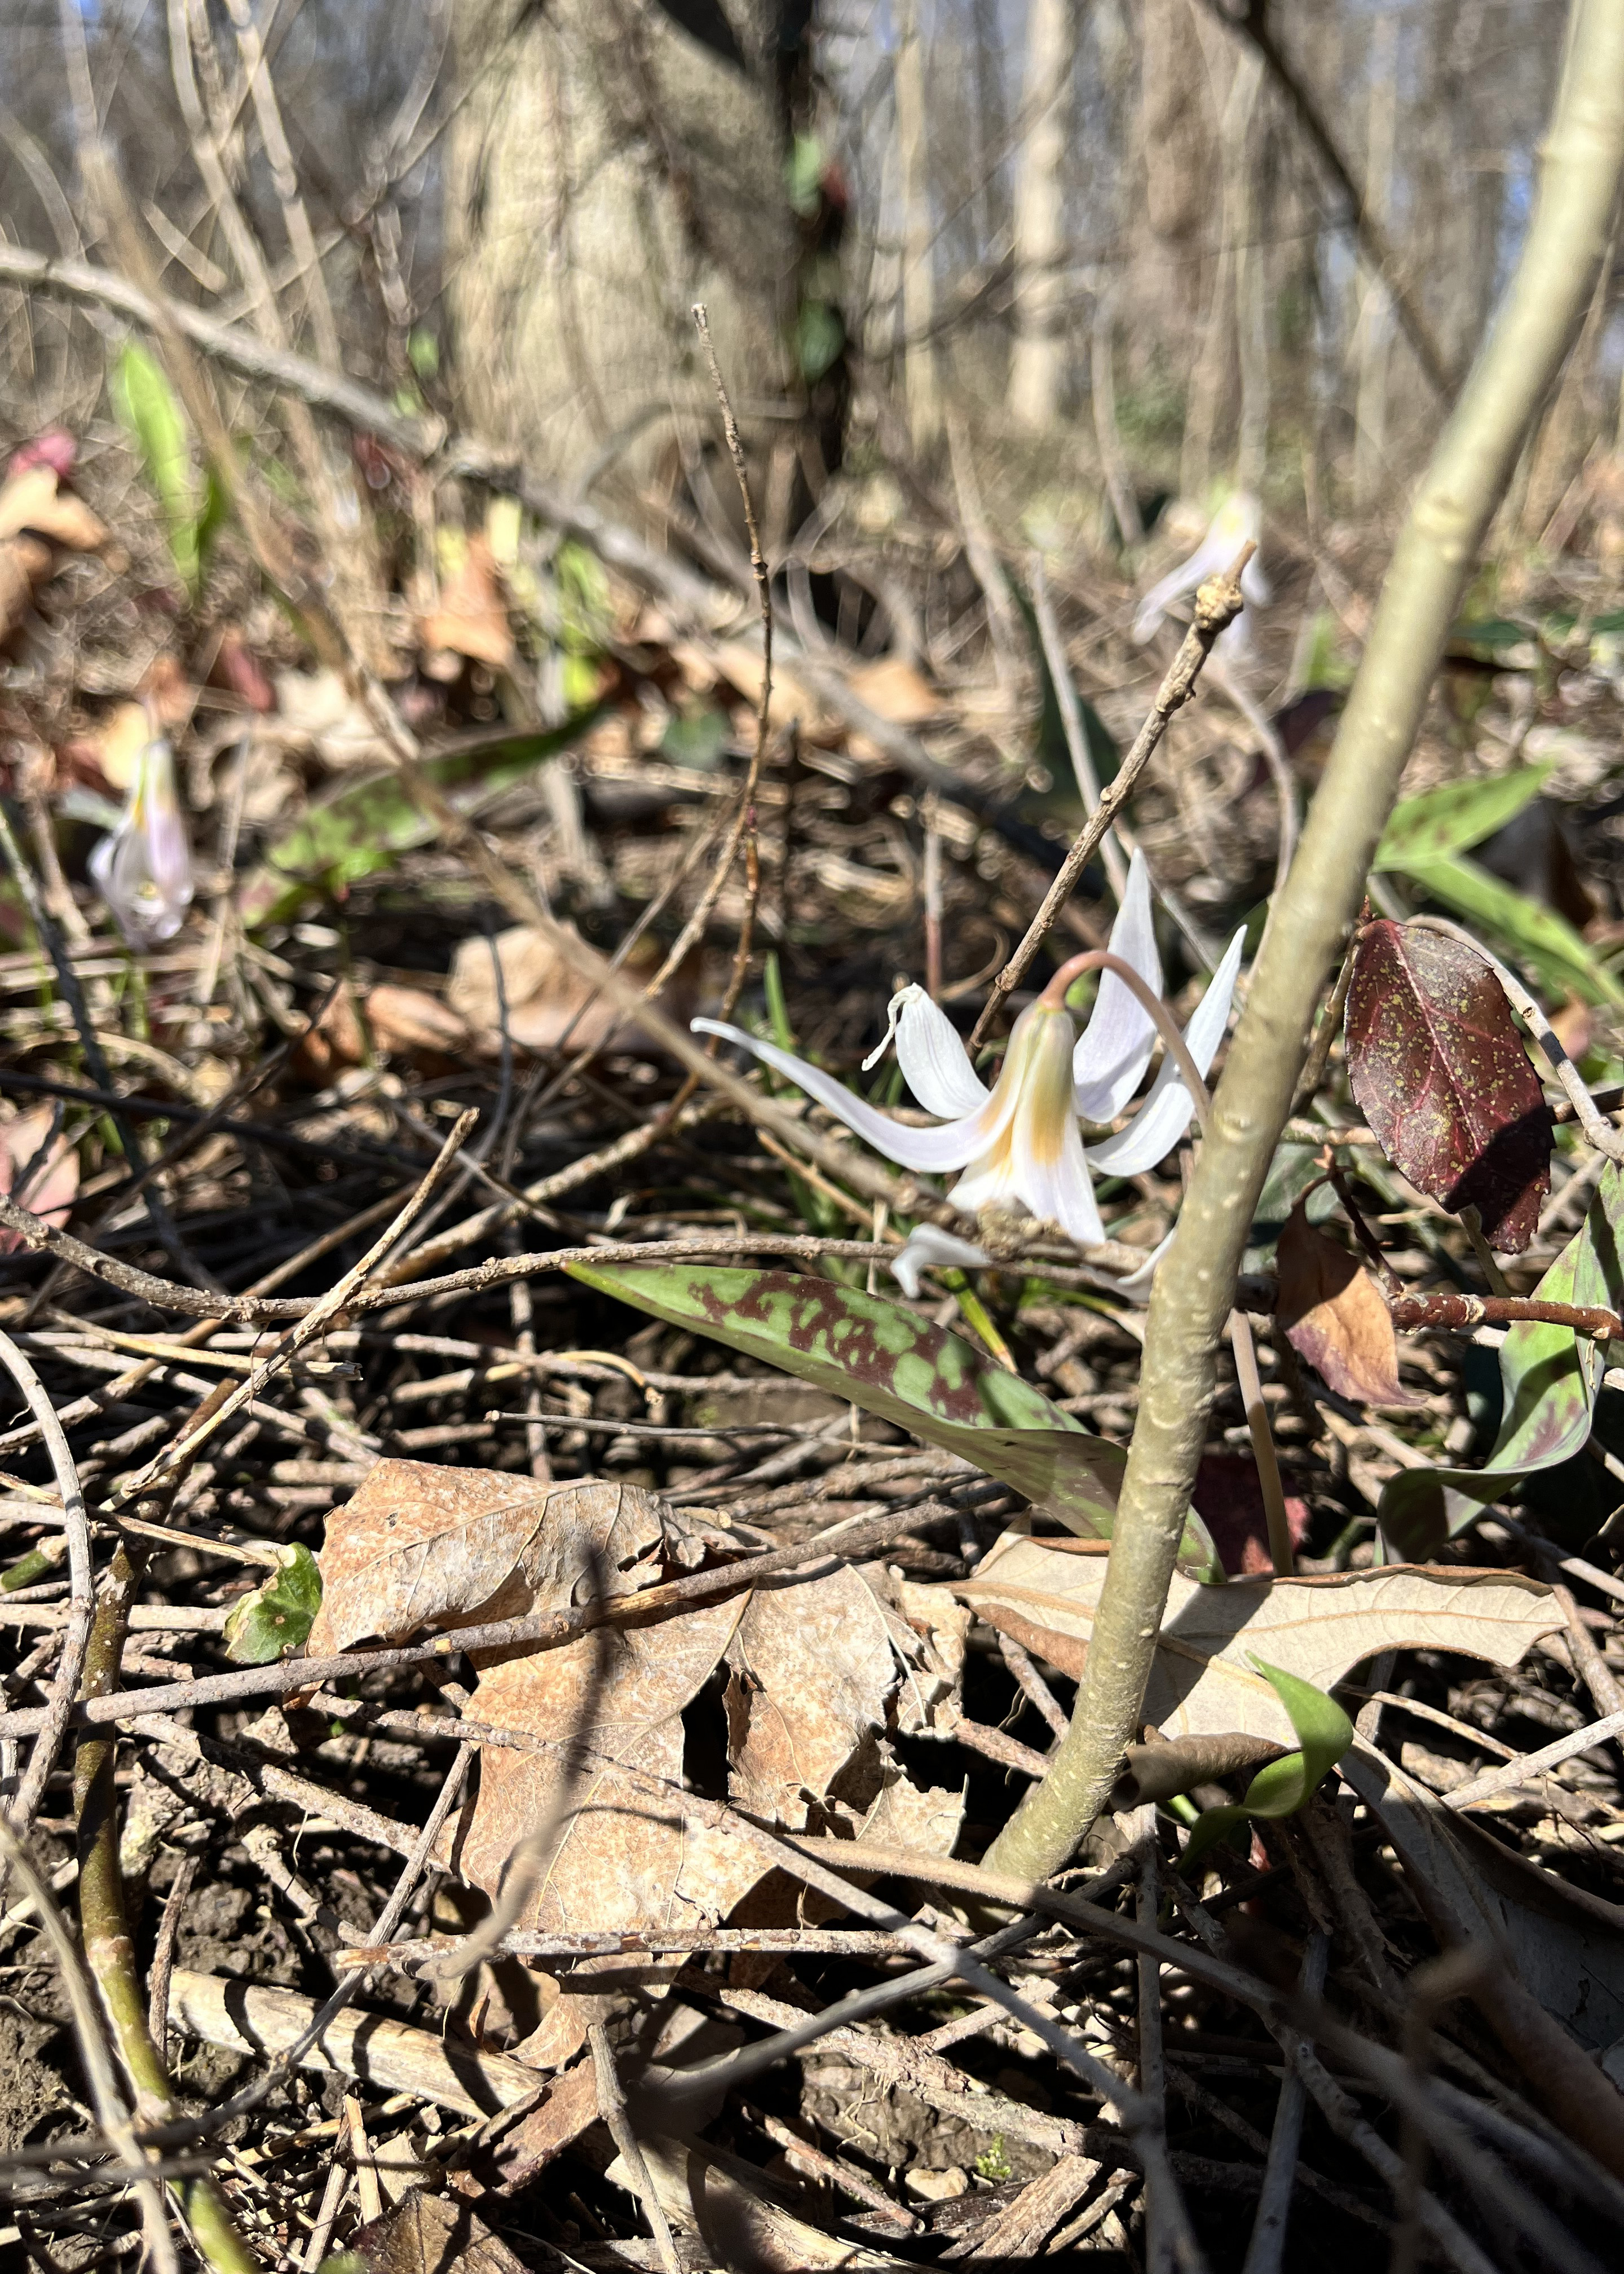 trout lily (Erythronium albidum) in dead wintercreeper